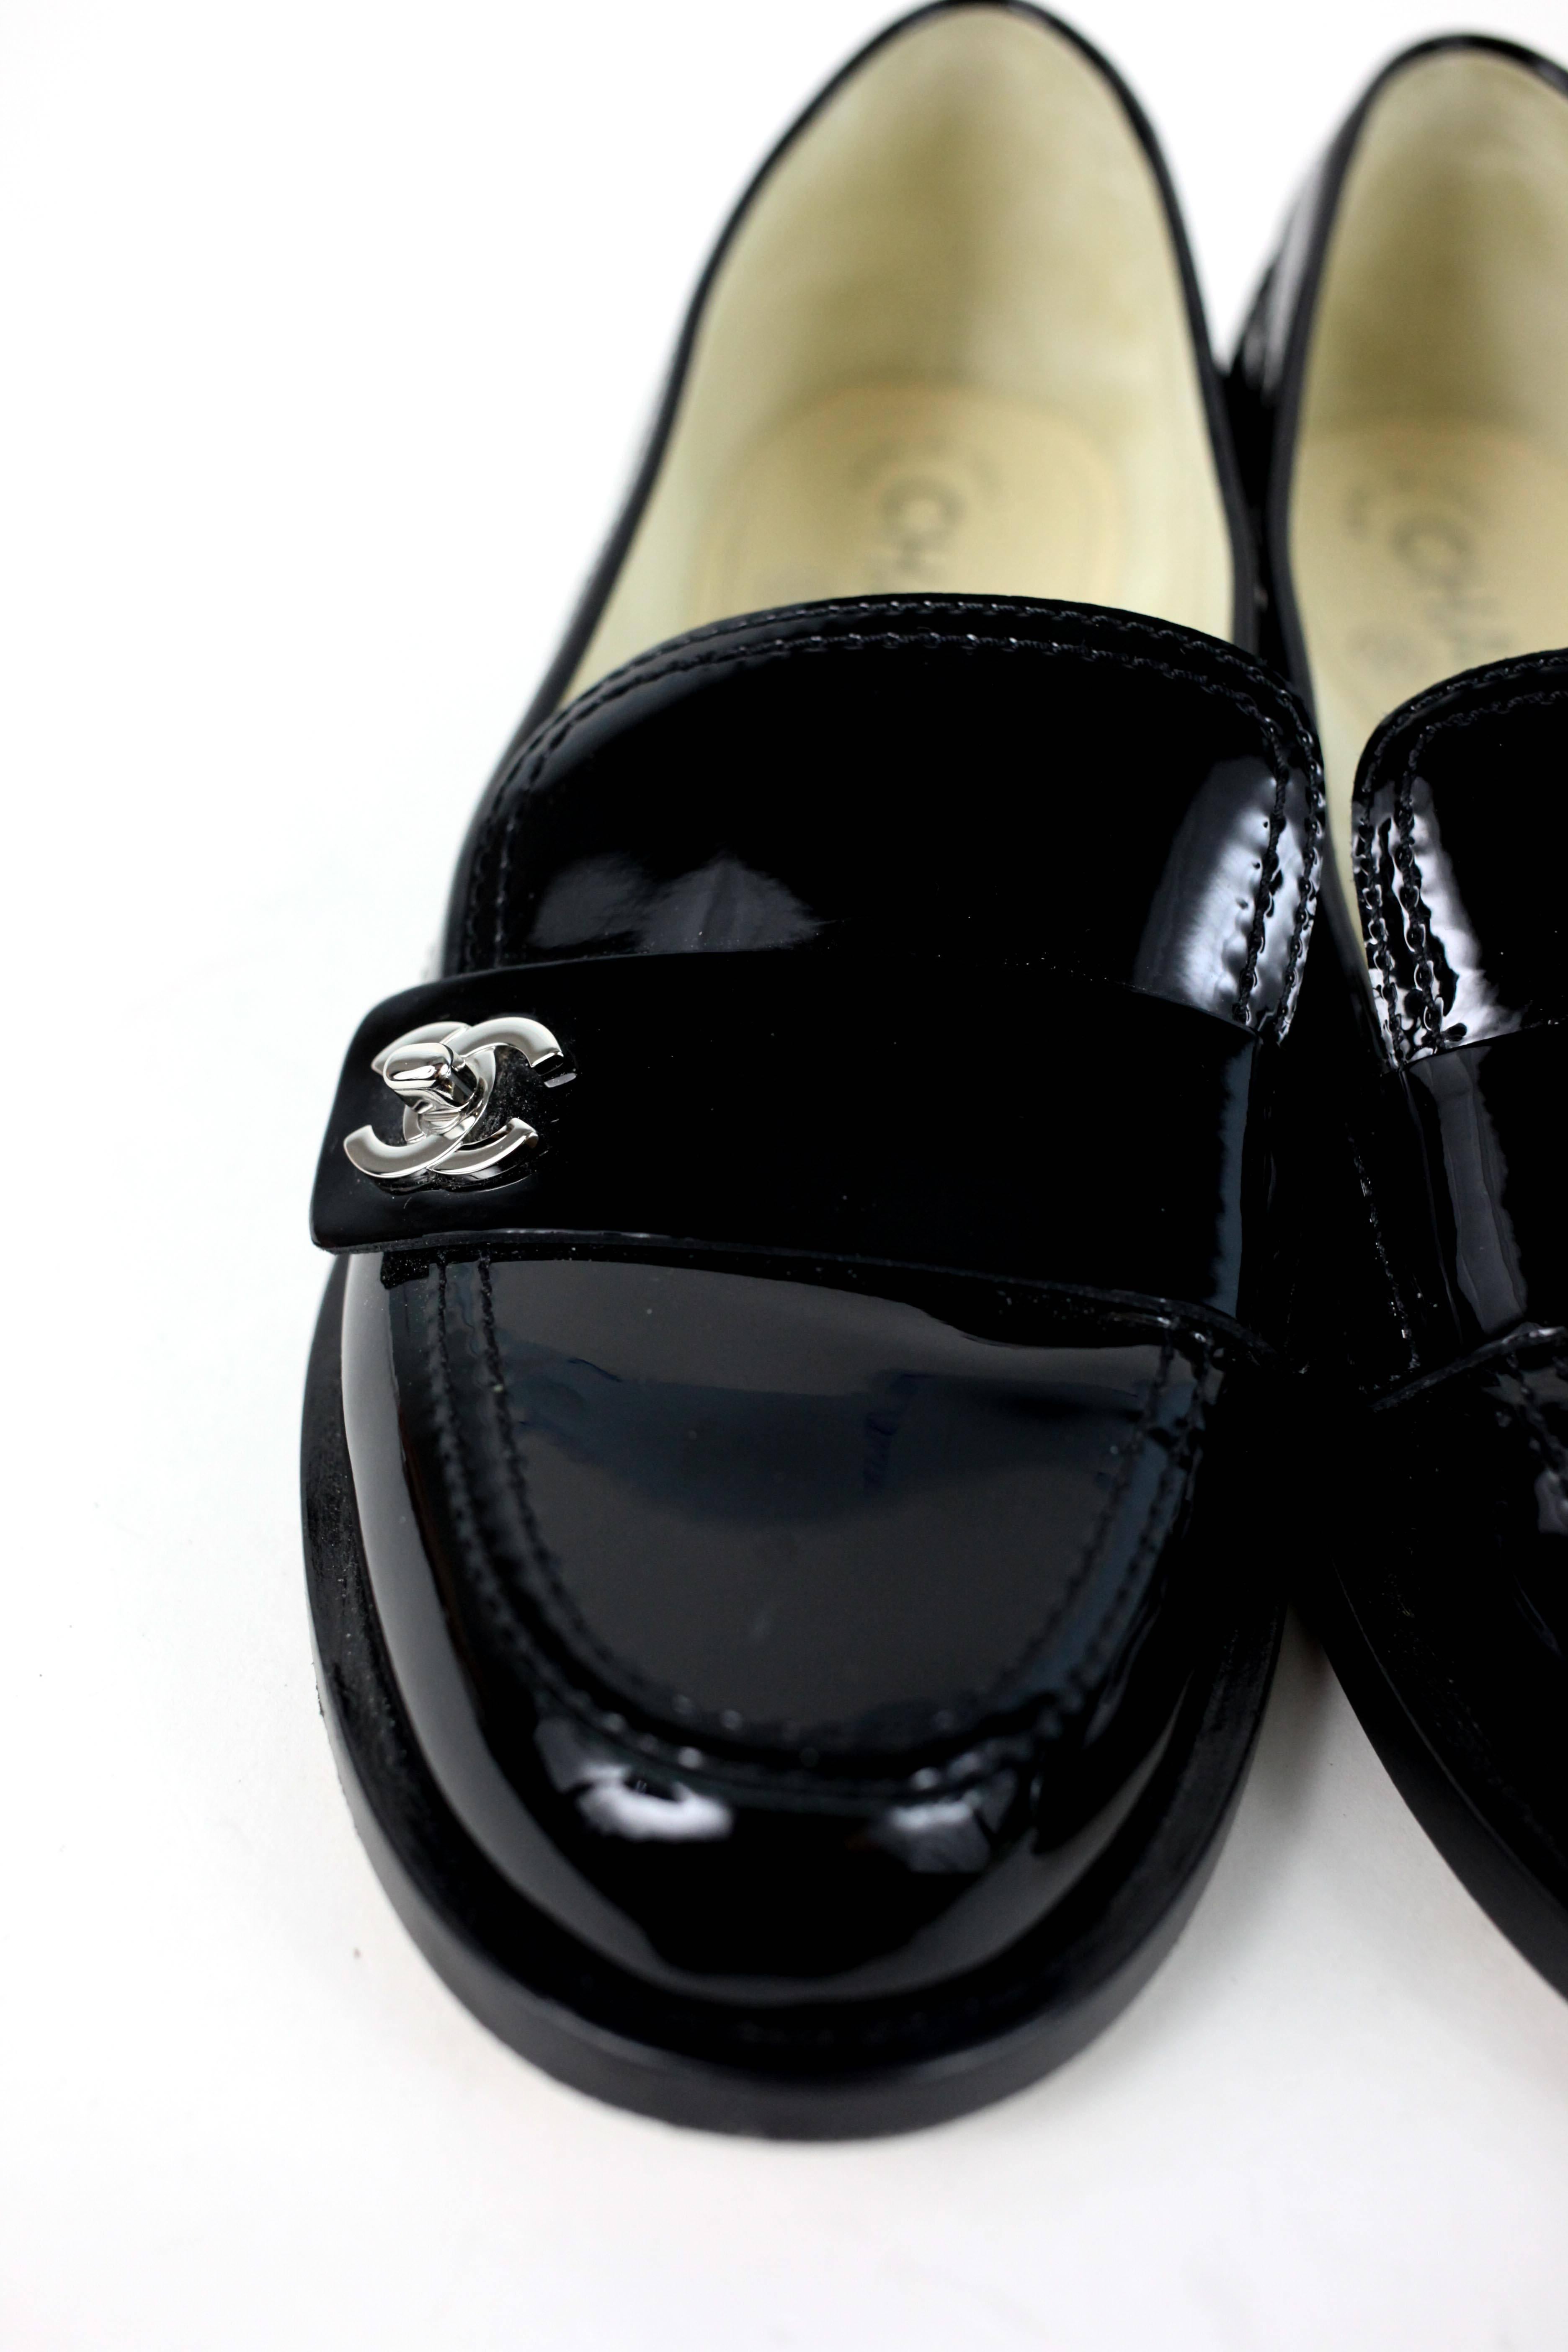 Chanel Loafer Black W/CC 36 2